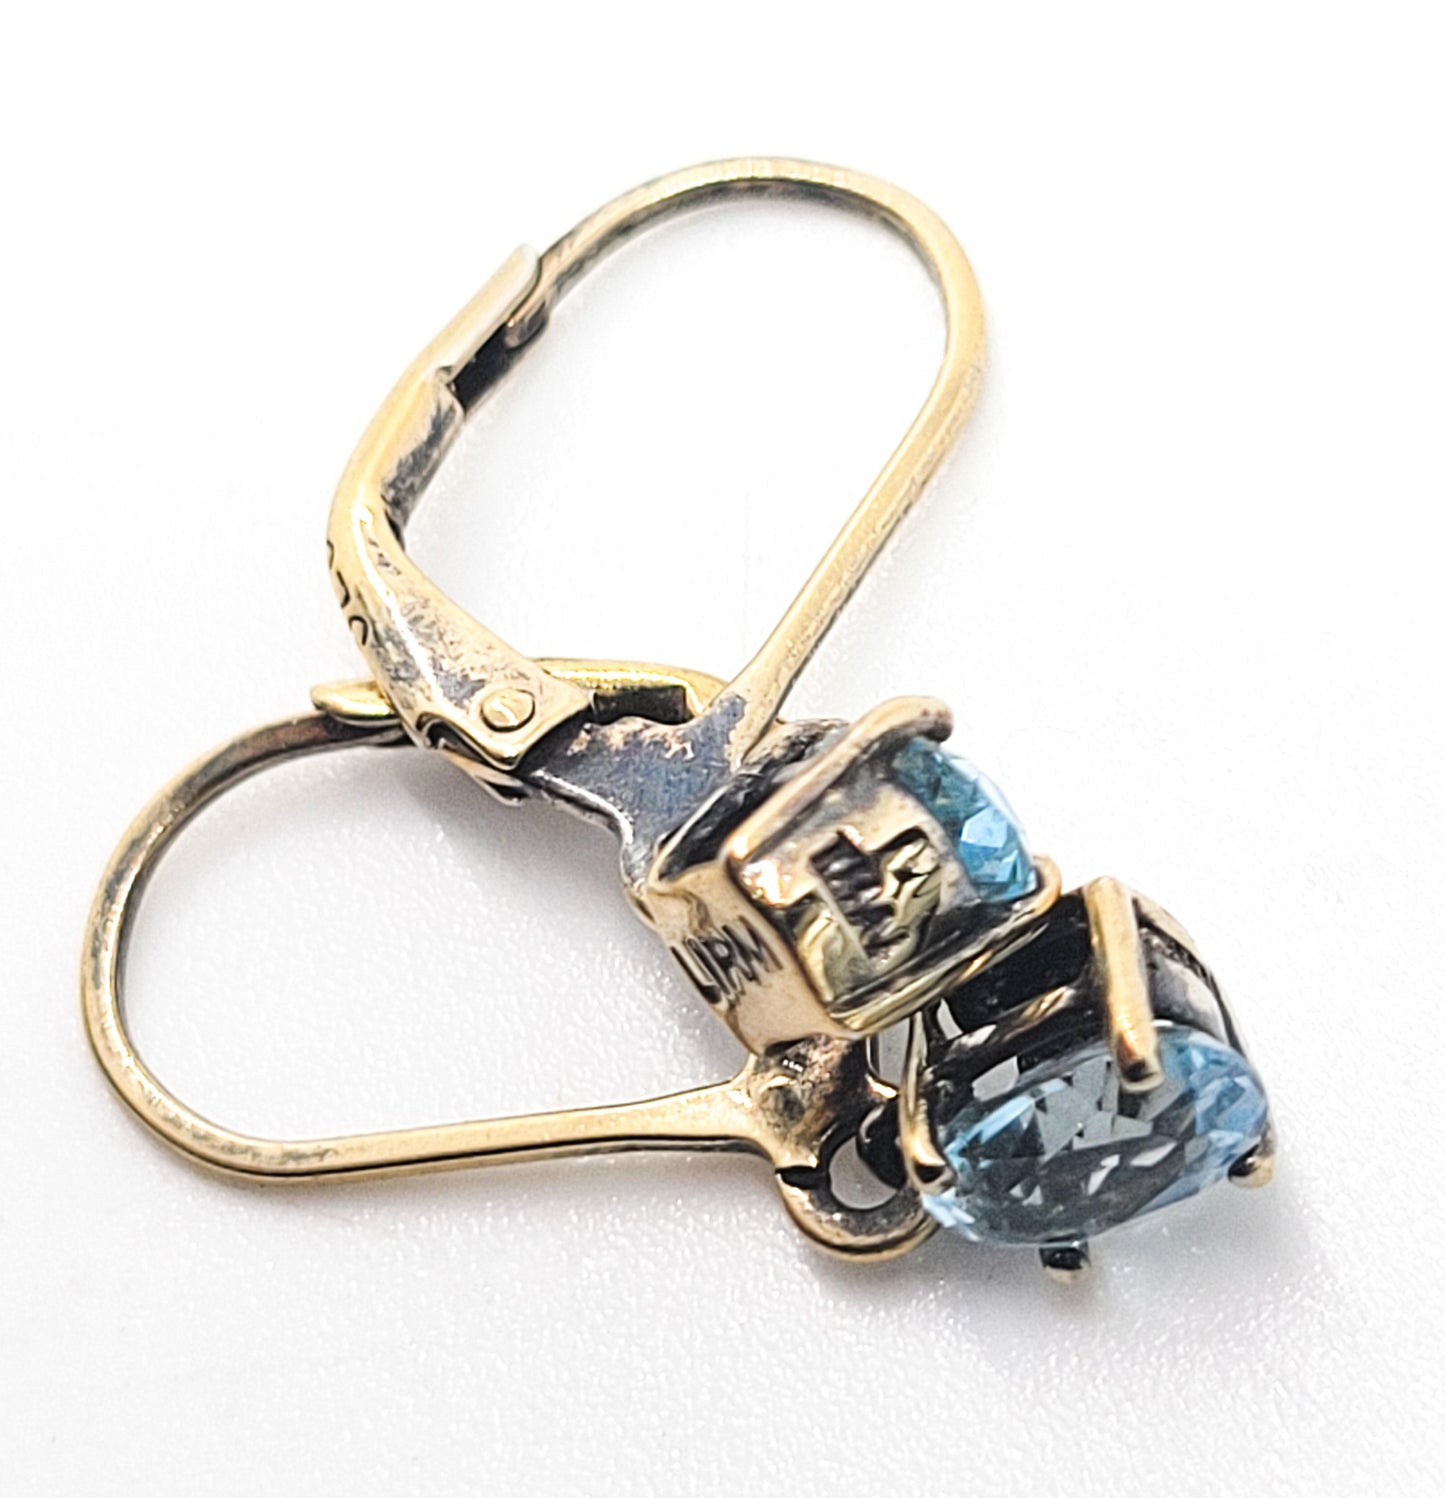 Lirm Blue topaz oval cut gold over sterling silver lever back earrings